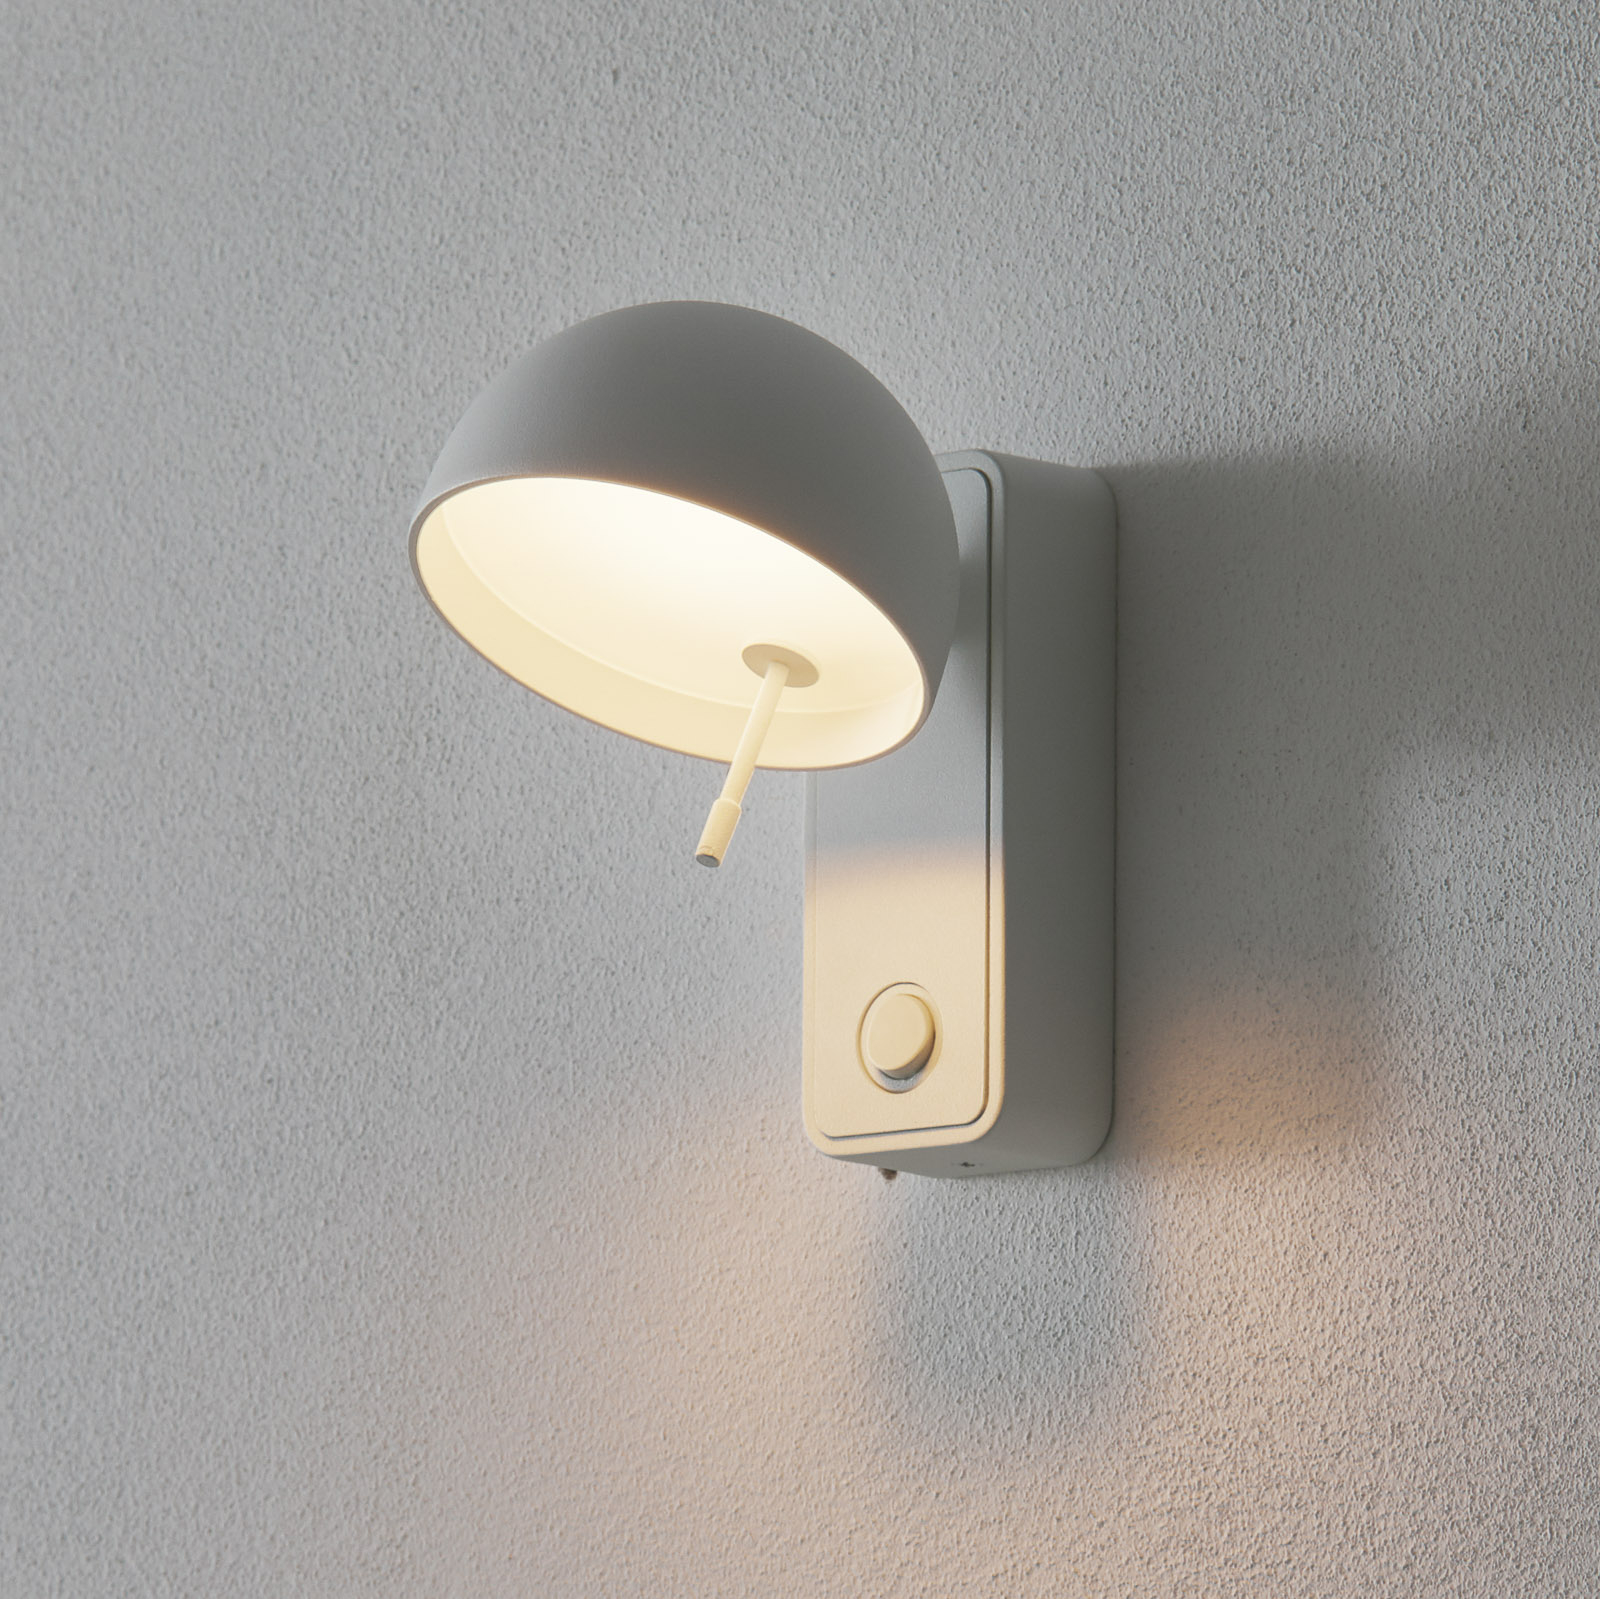 Bover Beddy A/01 LED-Wandlampe drehbar weiß/weiß